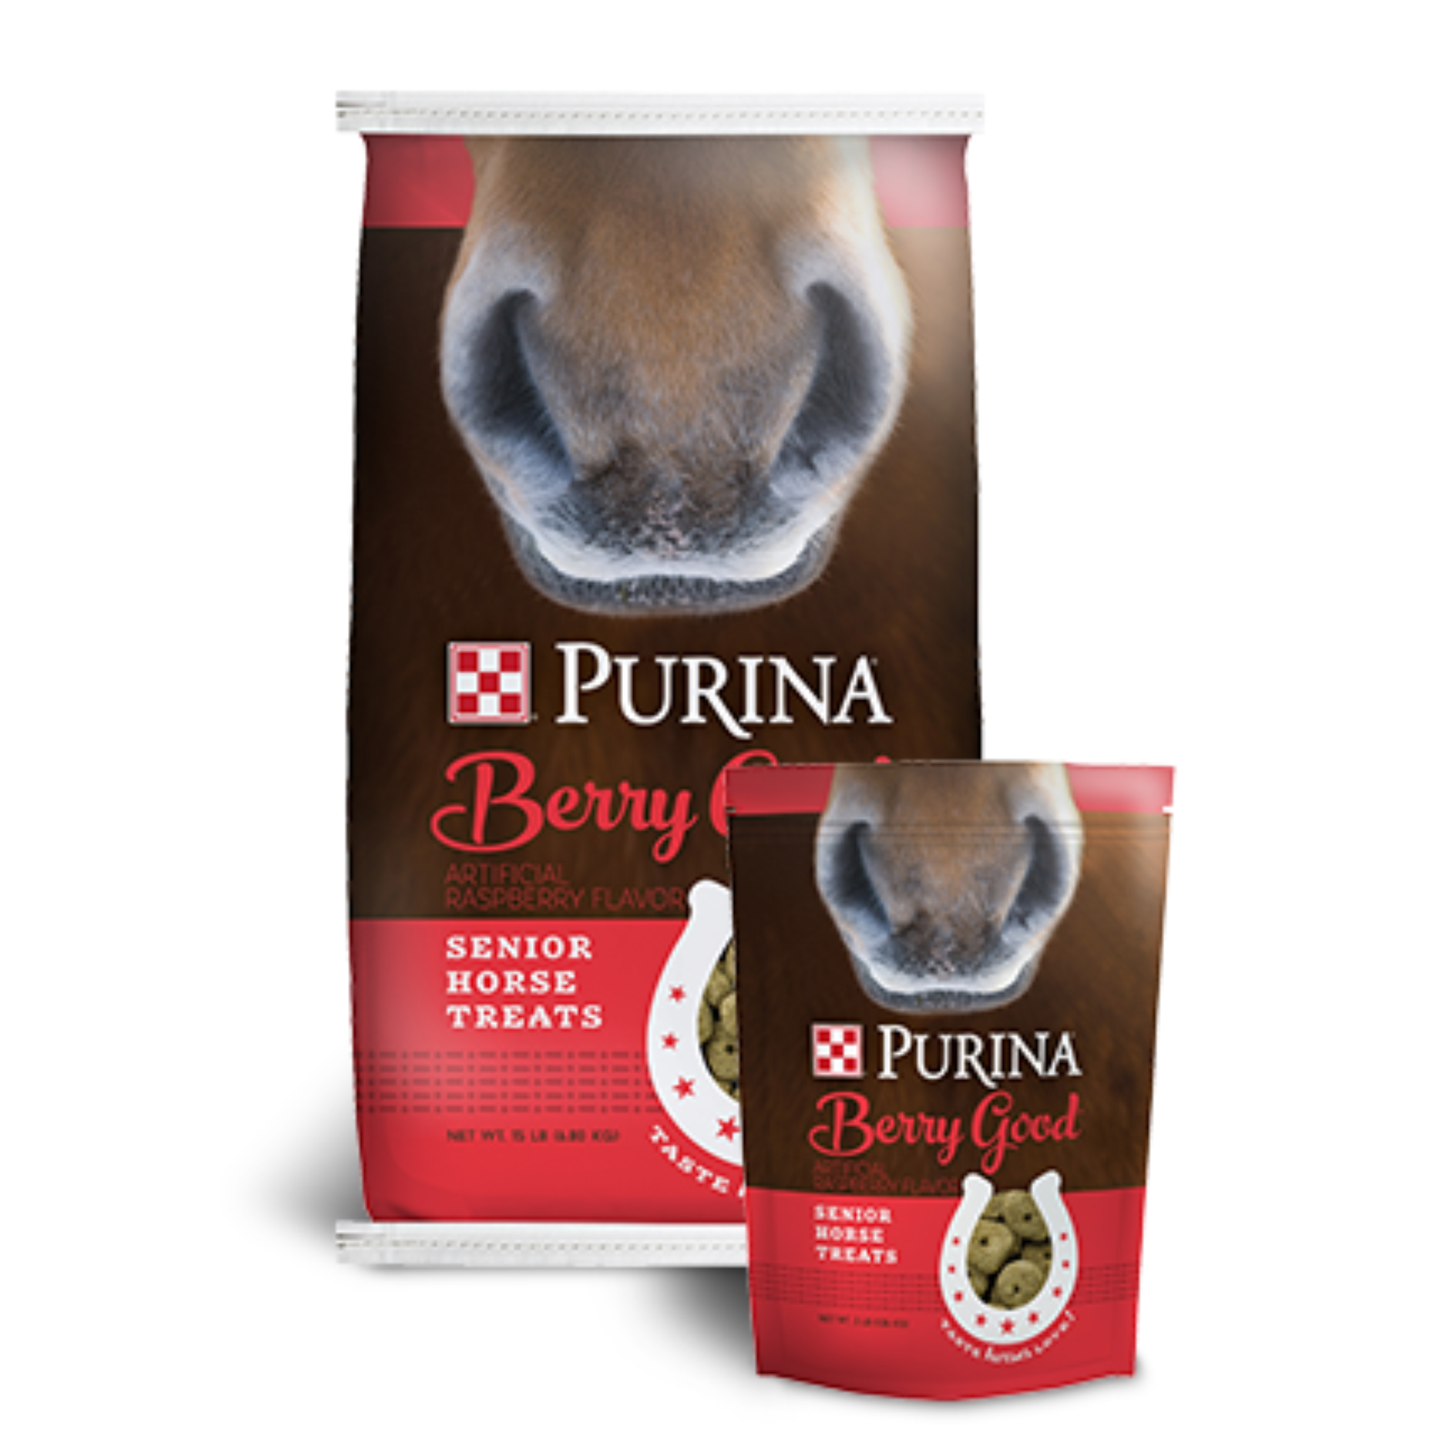 Purina Berry Good Horse Treats 3lb